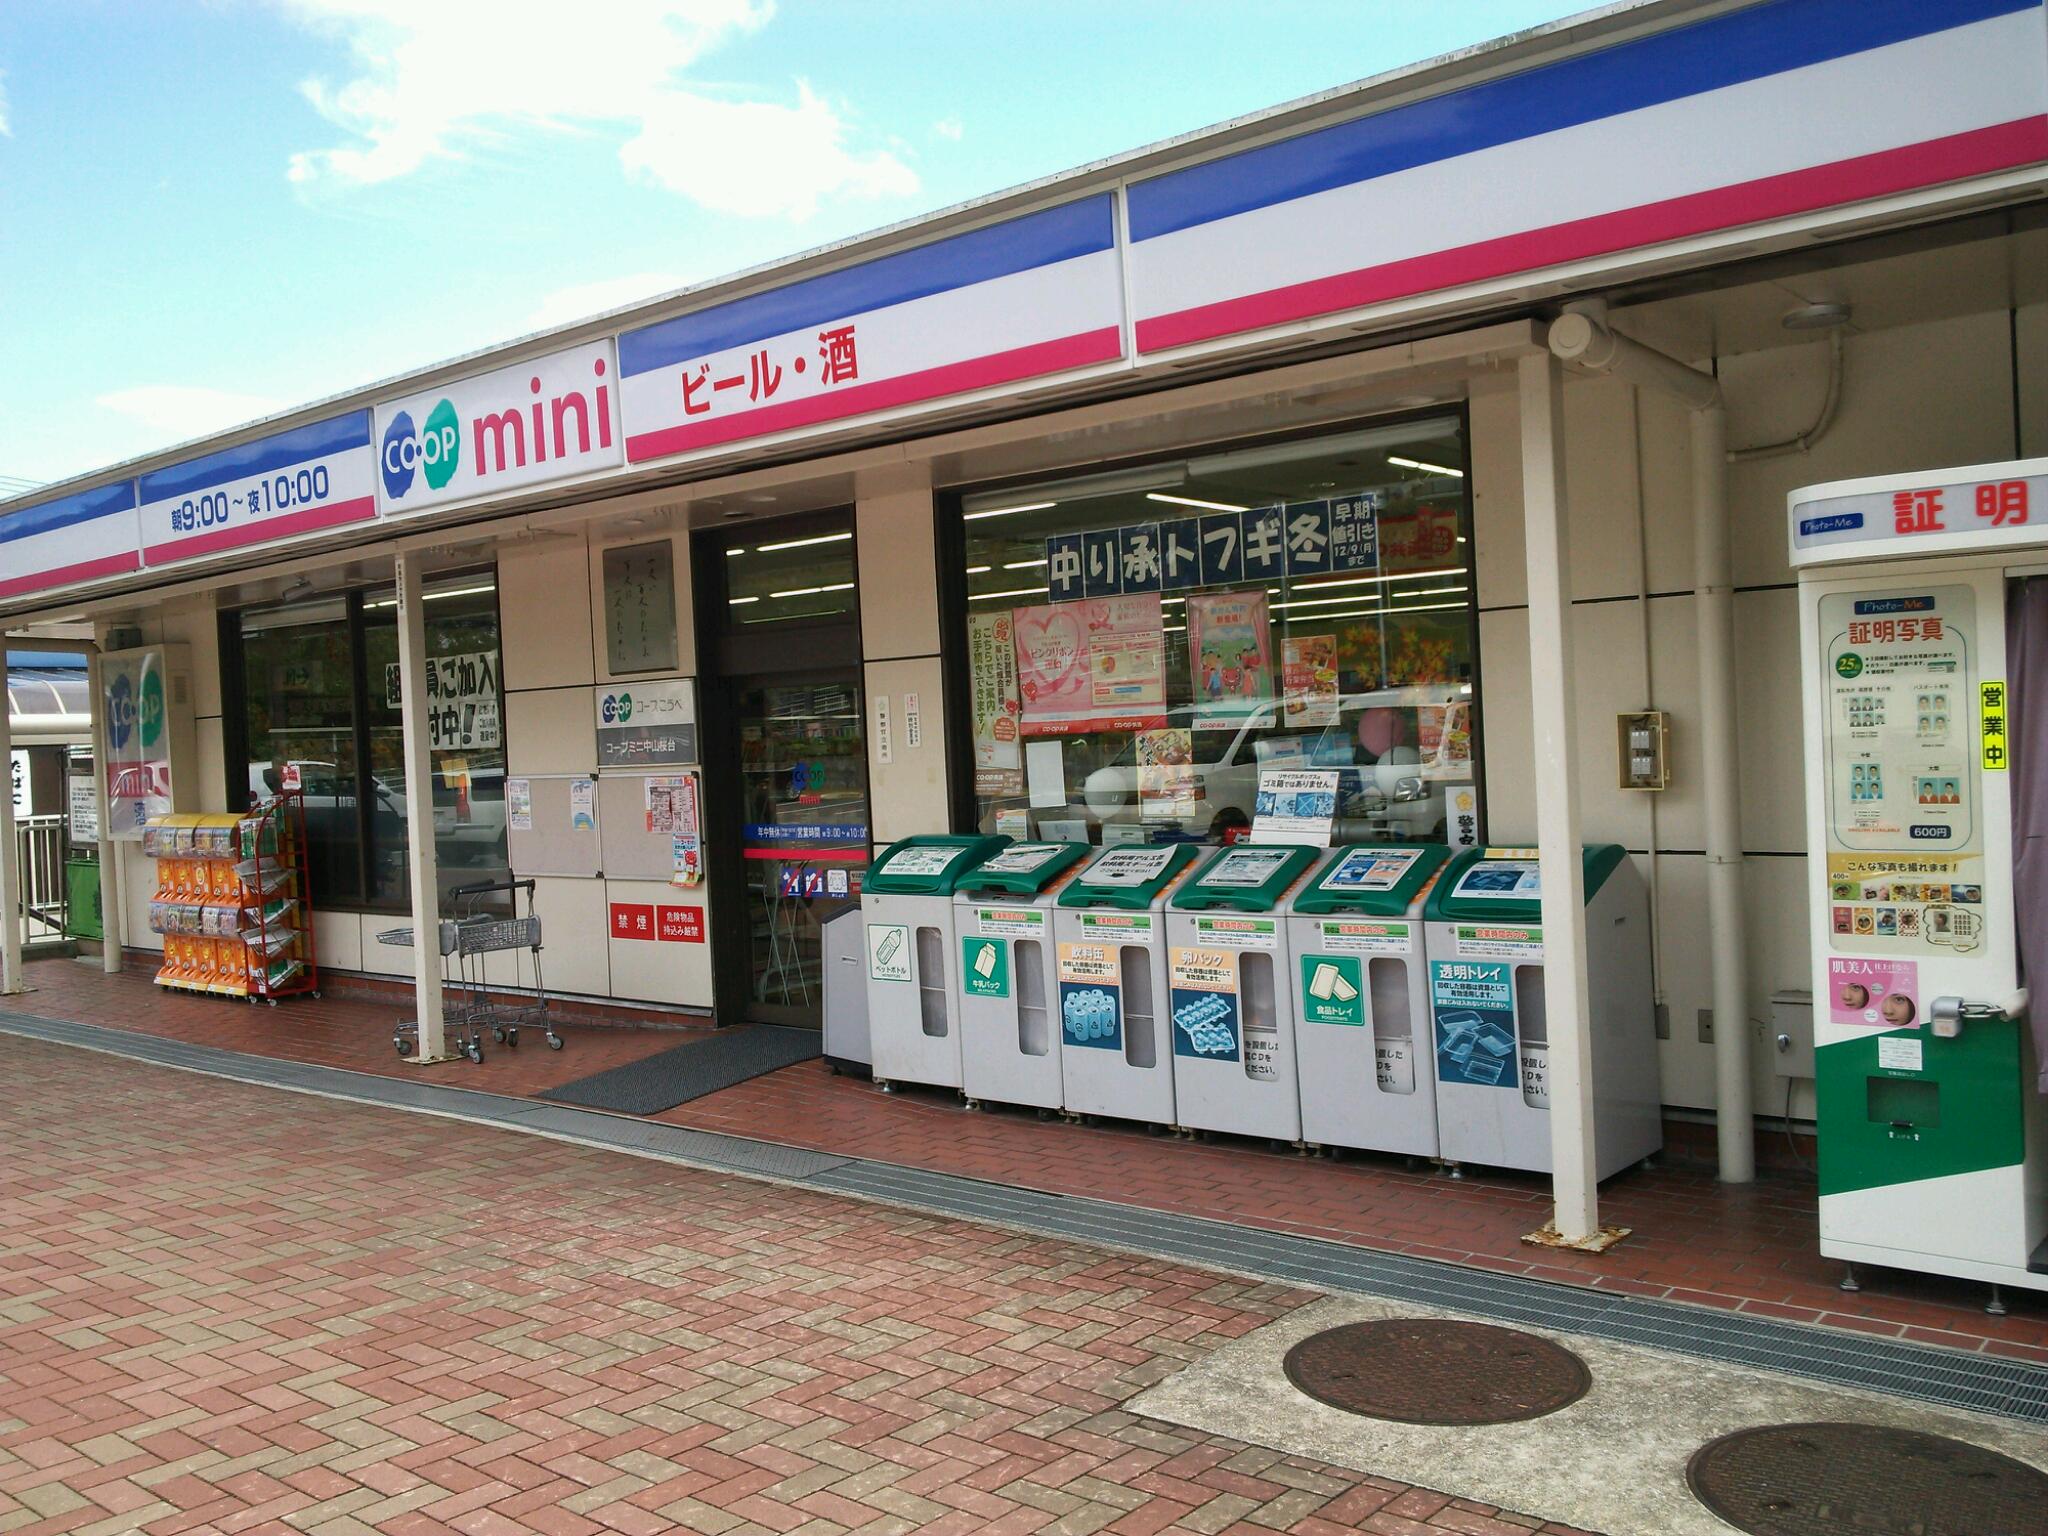 Supermarket. Kopumini Nakayamasakuradai until the (super) 350m